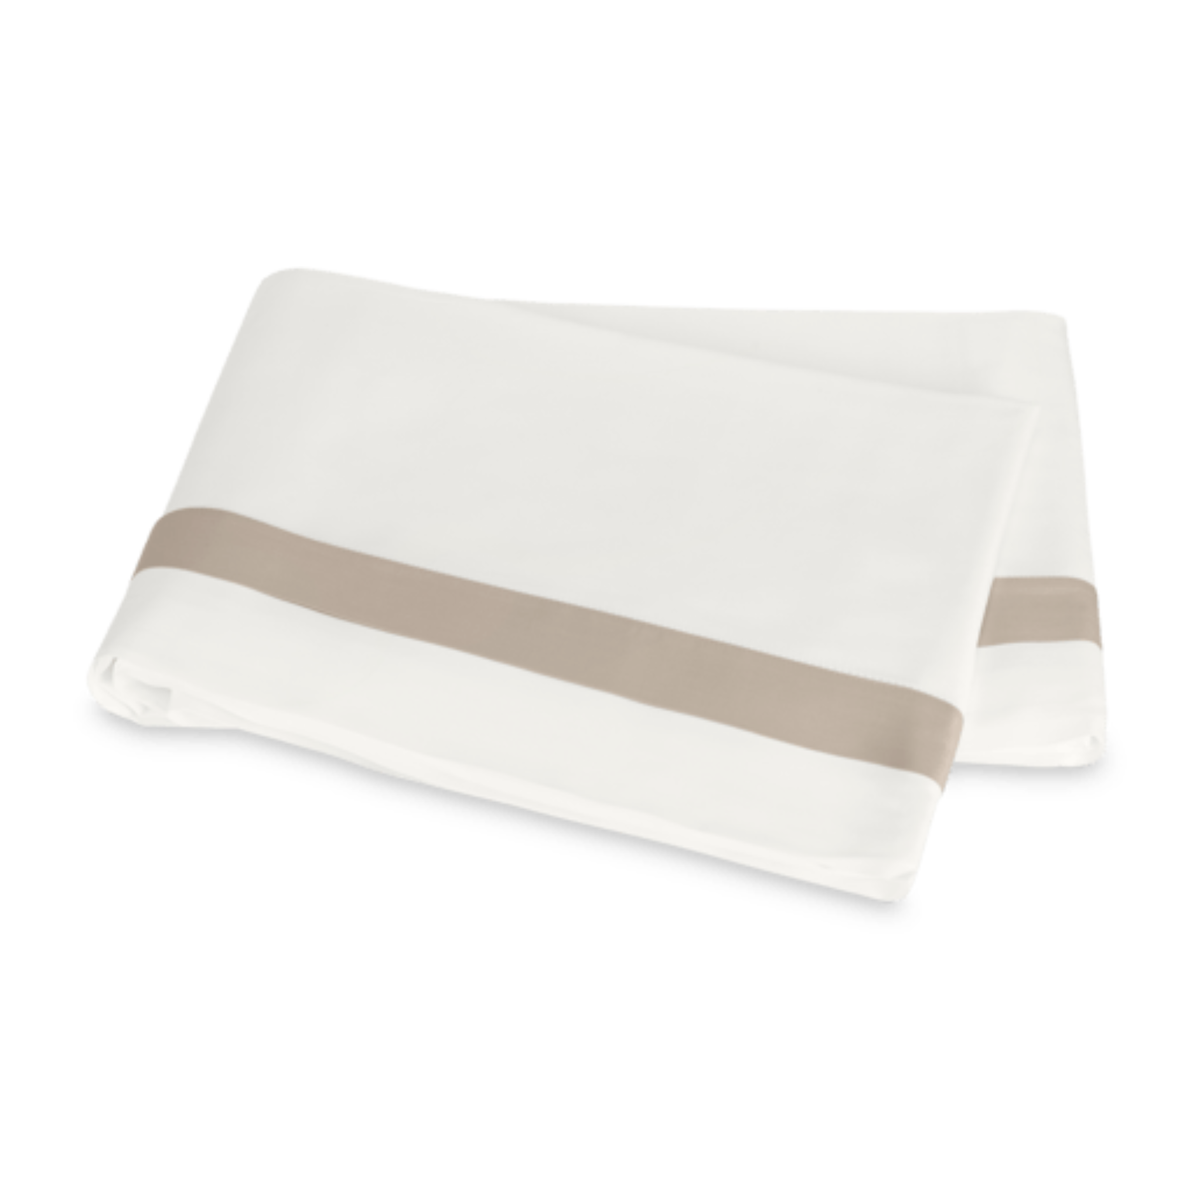 Silo Image of Matouk Ambrose Bedding Flat Sheet in Bone/Khaki Color